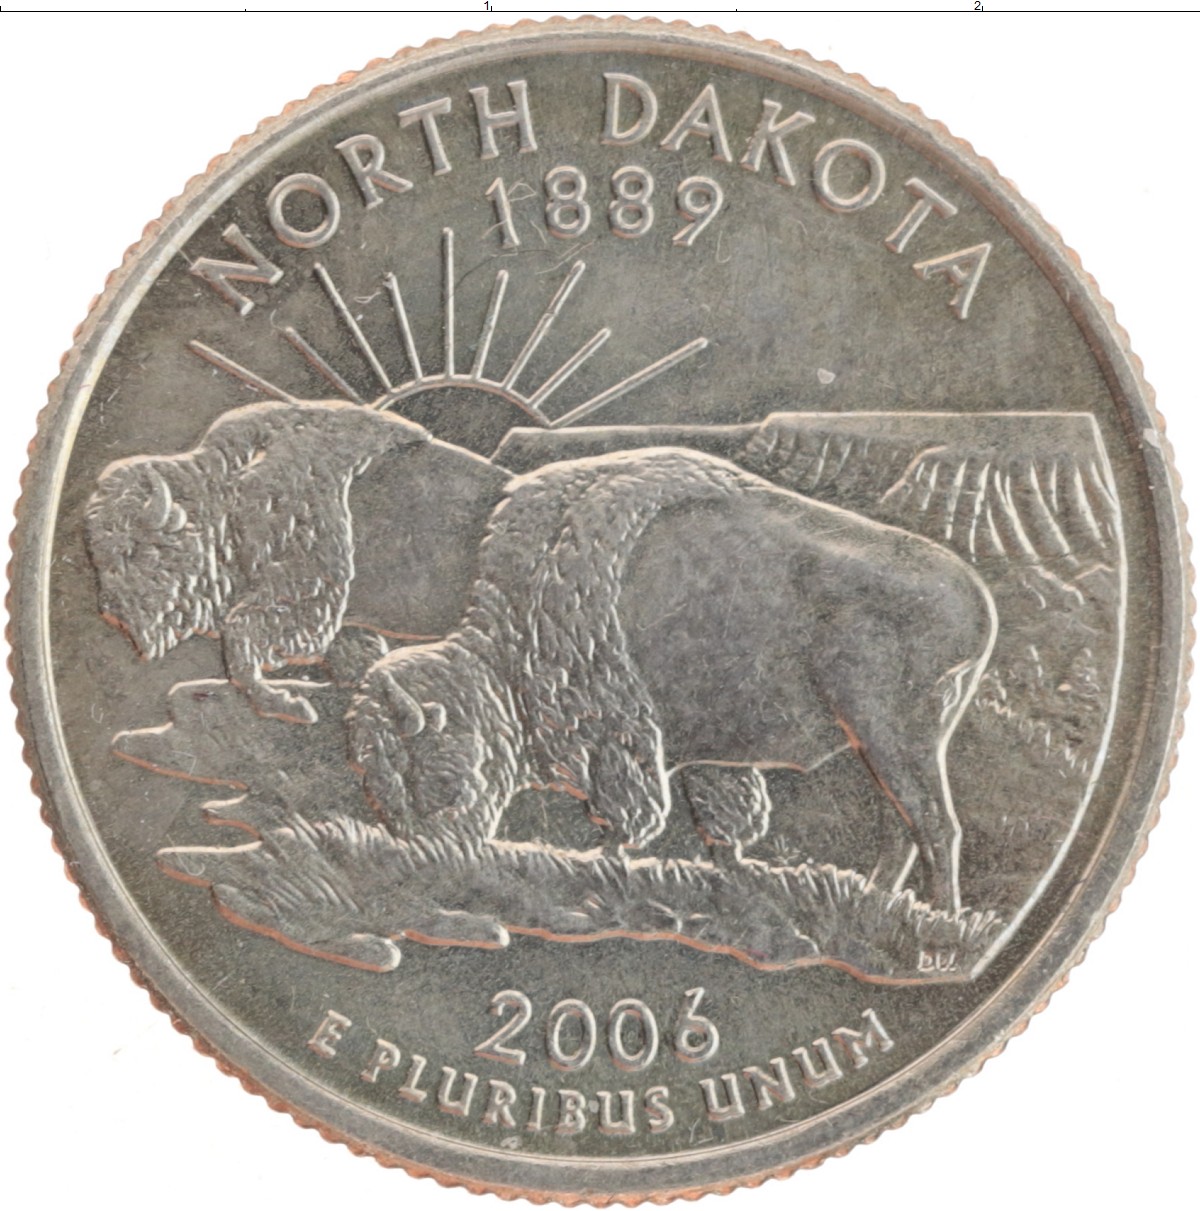 2006 долларов в рублях. Монета 2006 Северная Дакота. Монета США 1/4 доллара. США монеты 2006 South Dakota. Доллар США 2006 года.